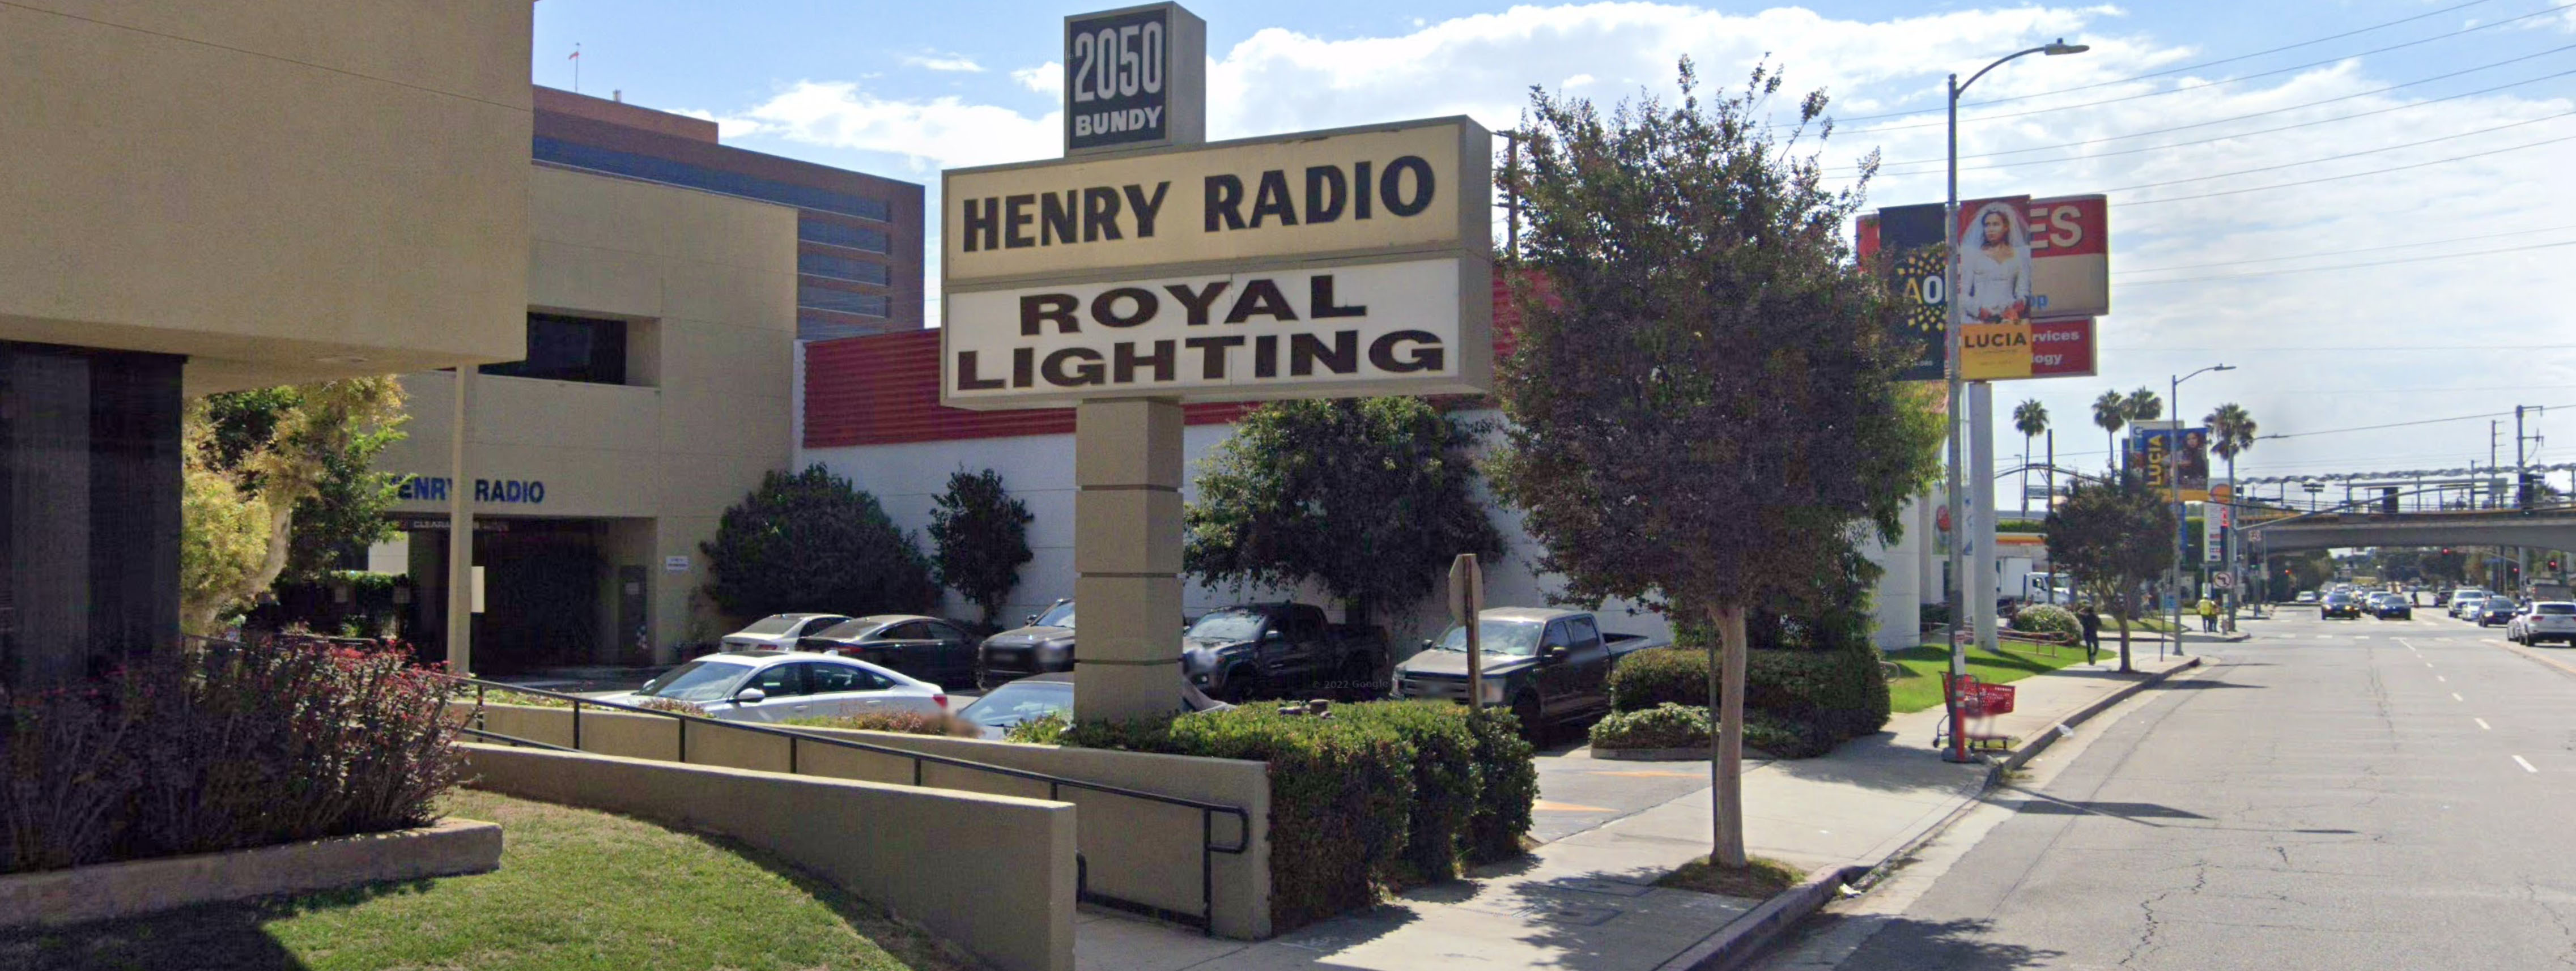 Henry Radio Inc